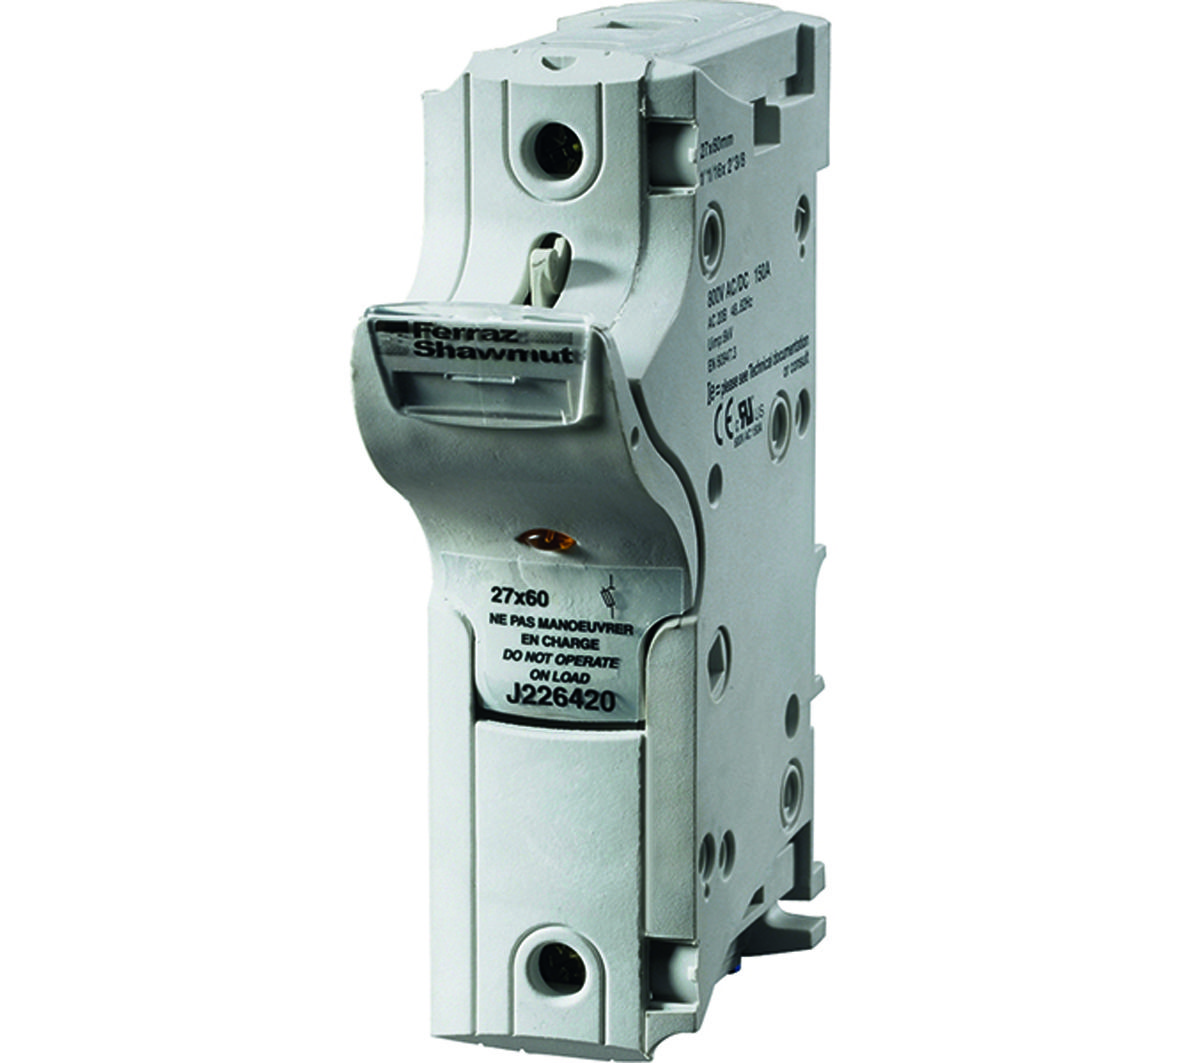 J226420 - modular fuse holder, UL, 1P, 27x60, DIN rail mounting, with indicator, IP20